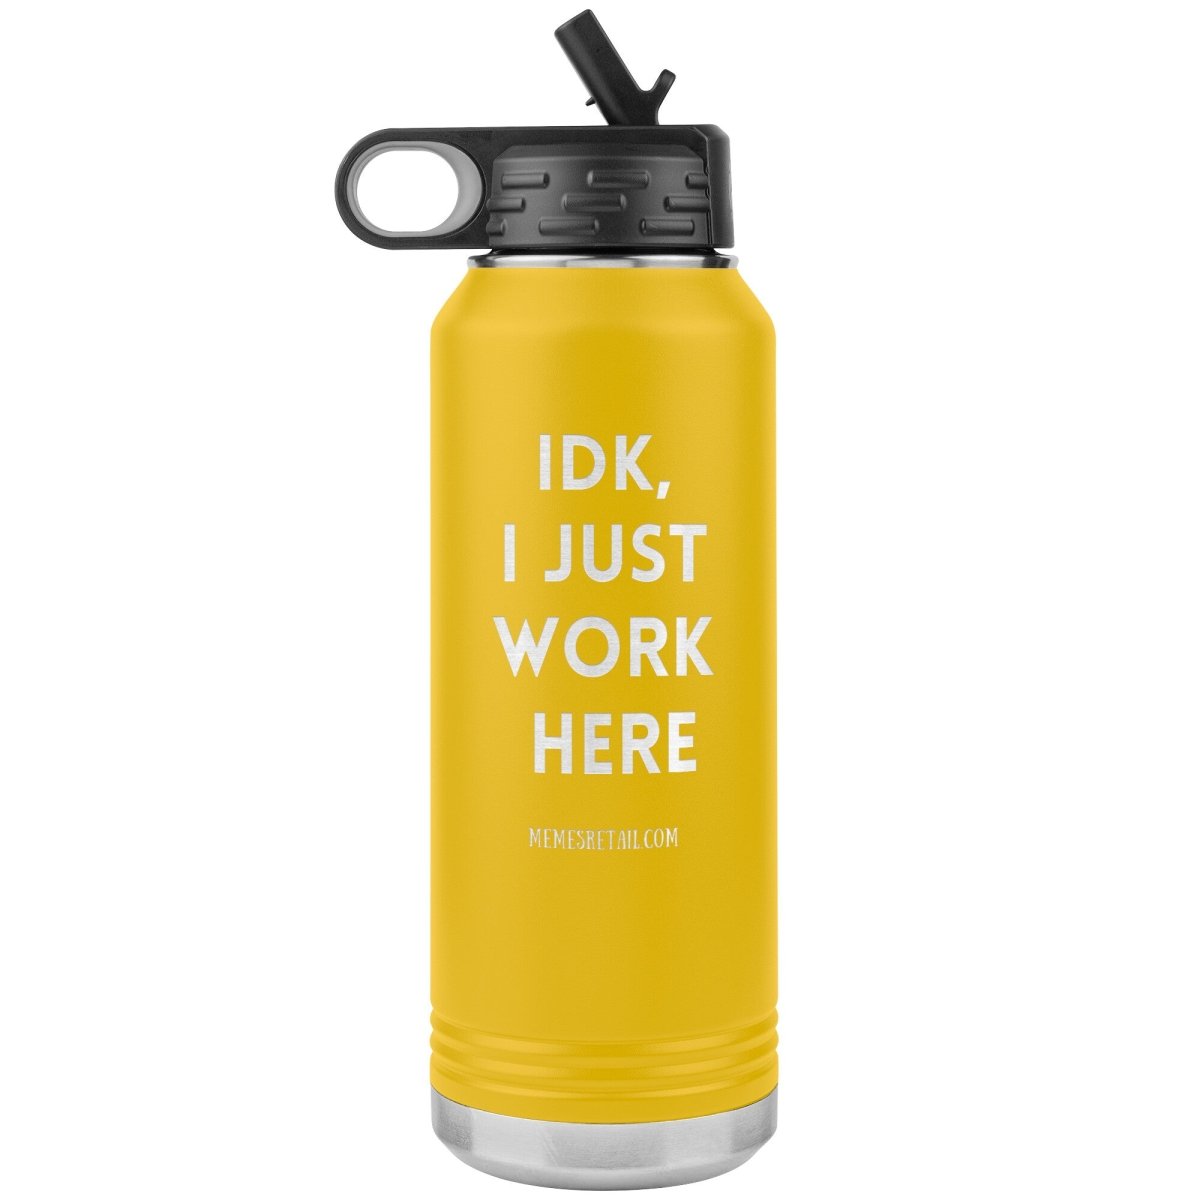 IDK, I Just Work Here 32 oz Stainless Steel Water Bottle Tumbler, Yellow - MemesRetail.com